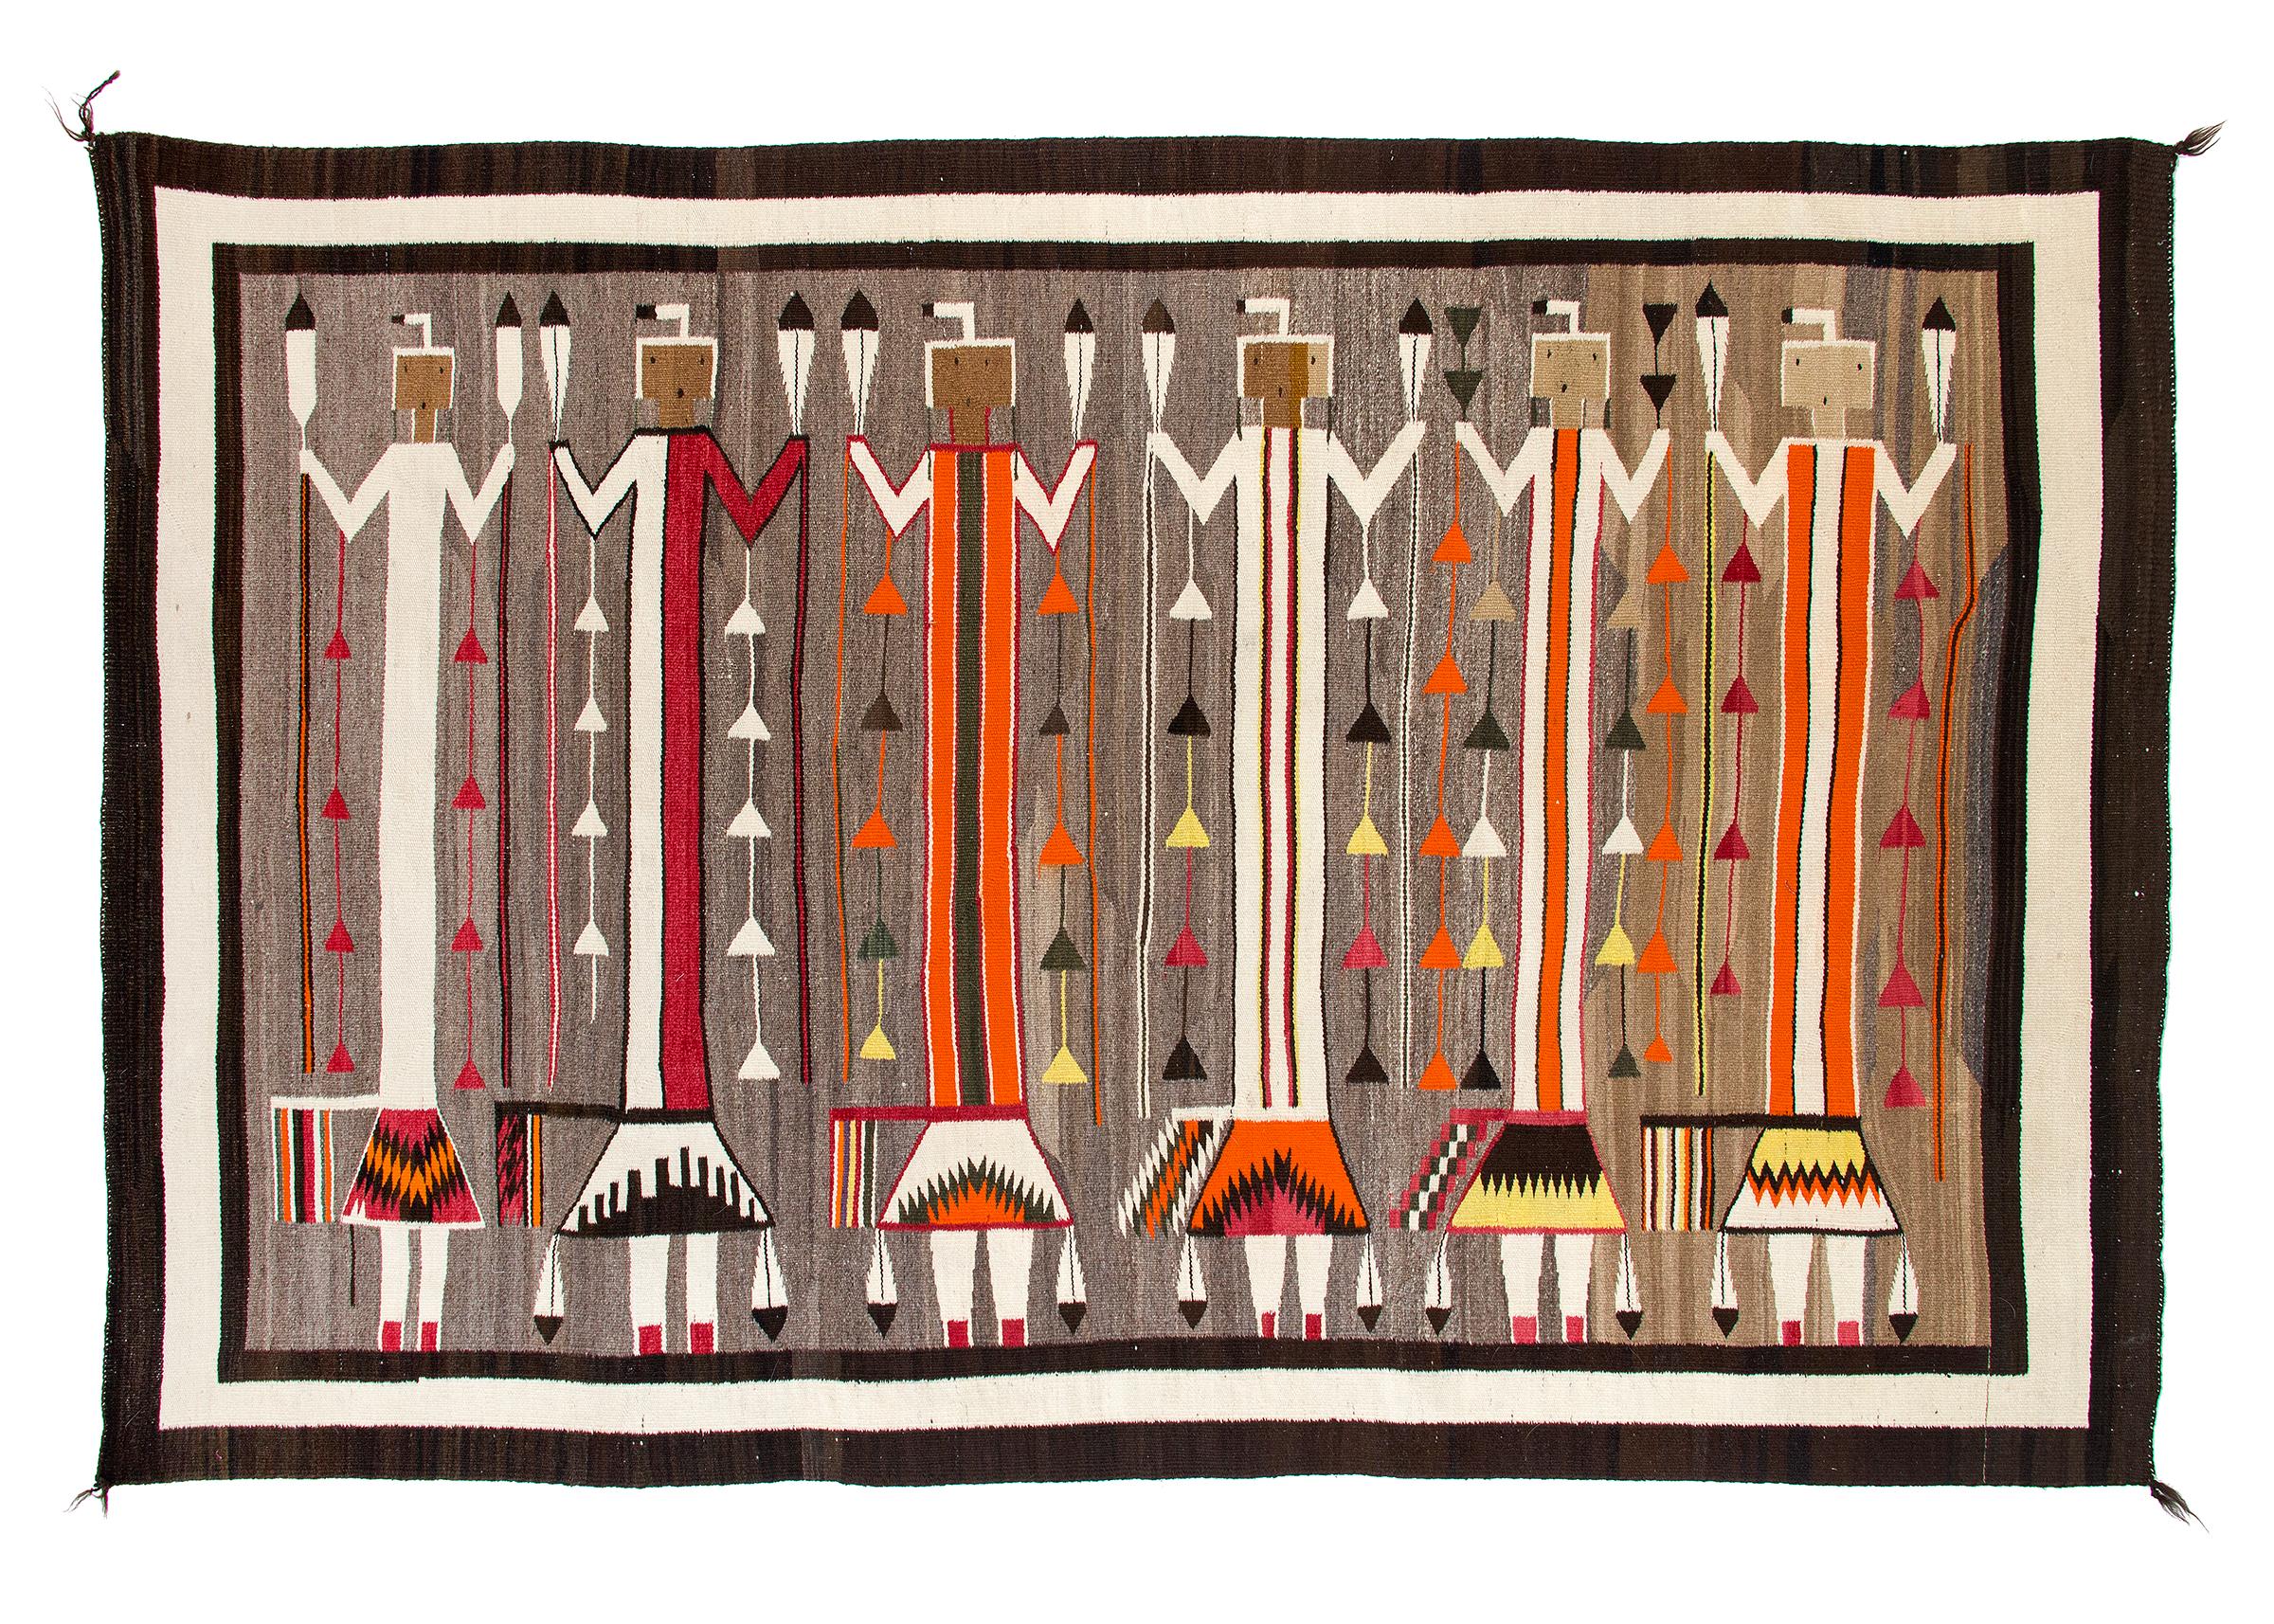 Hand-Woven Vintage Navajo Rug, Pictorial Yei Weaving circa 1920s-1930s Southwestern Textile